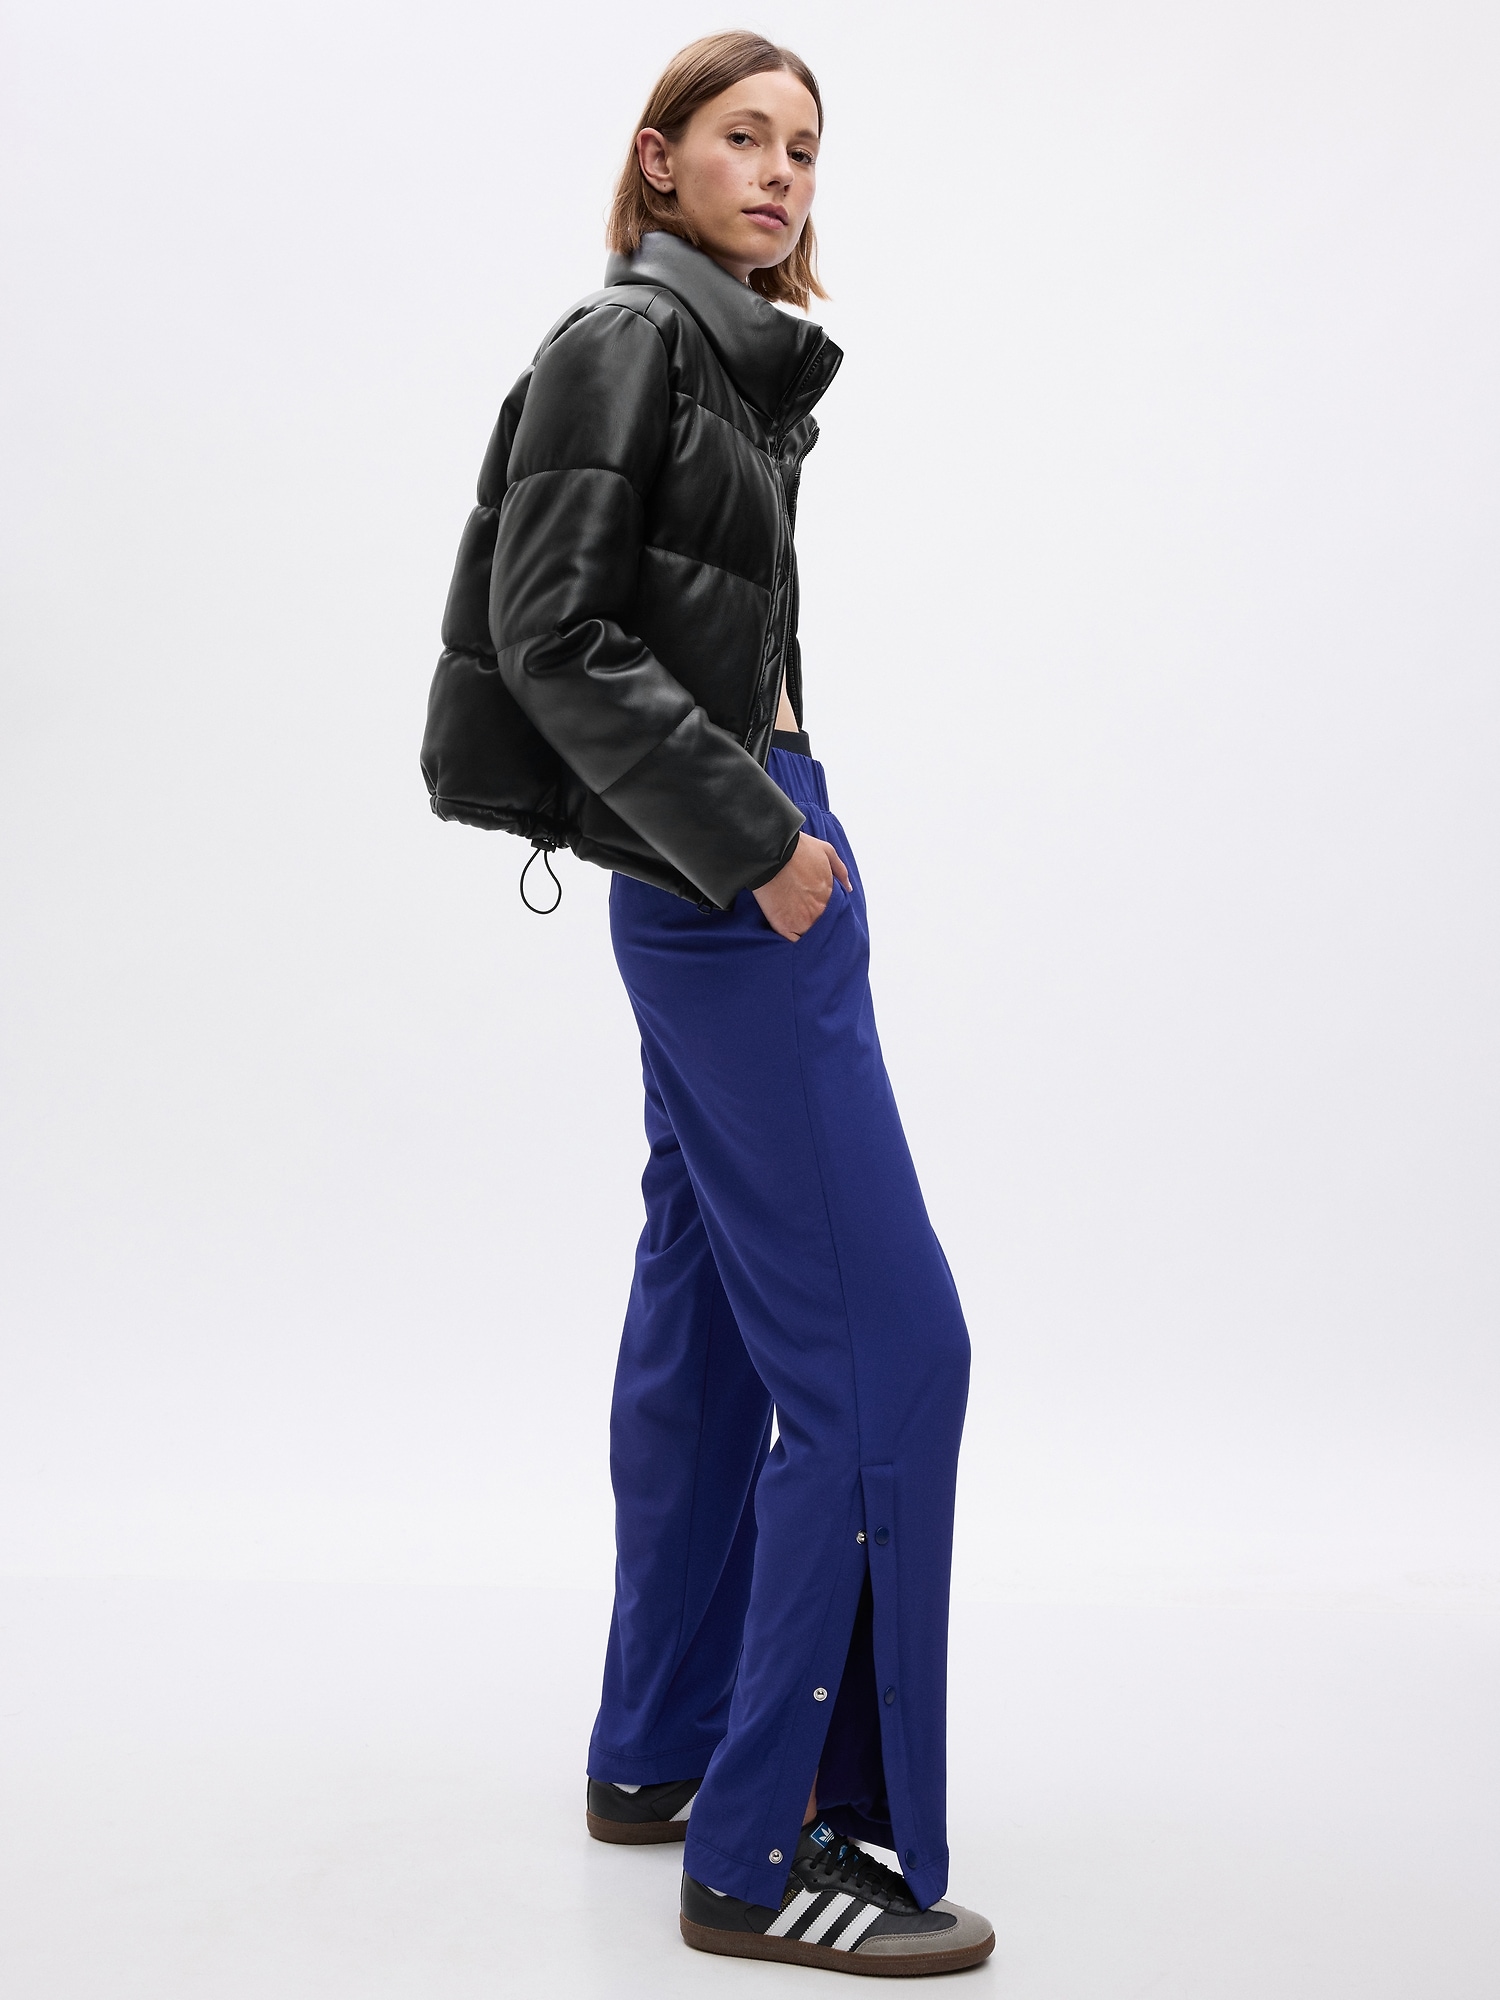 Generic Womens Sweatpants Fleece Lined Jogger Pants Casual Warm Soft Black  2XL @ Best Price Online